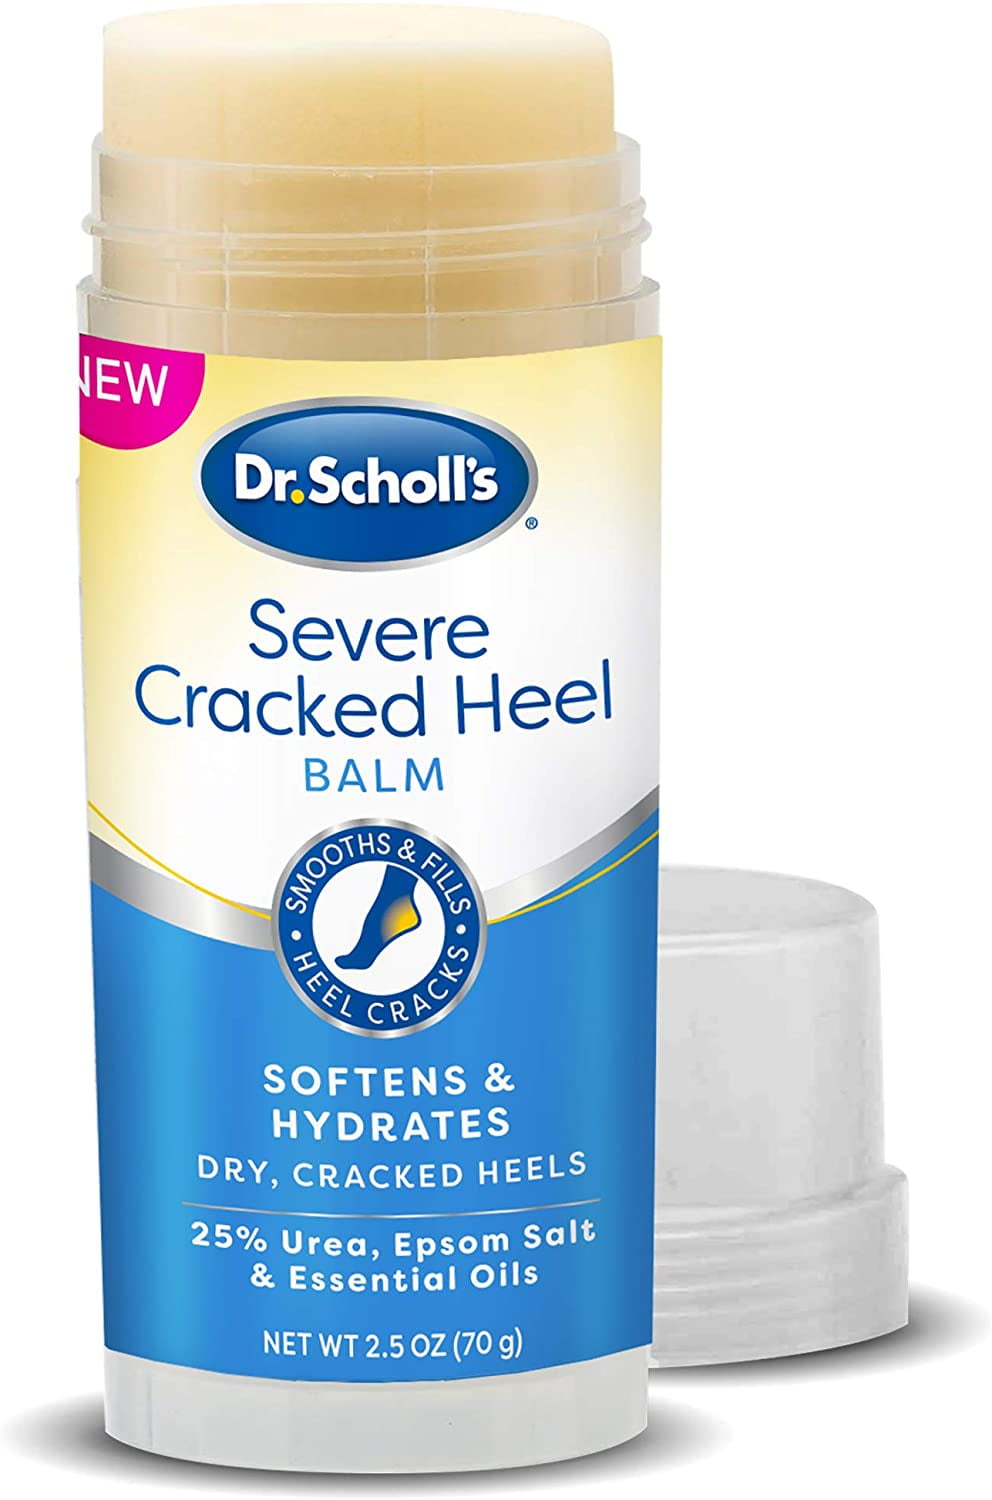 Amazon.com : Scholl Reconstitutive Cream For Cracked Heels Active Repair K+  60Ml : Beauty & Personal Care